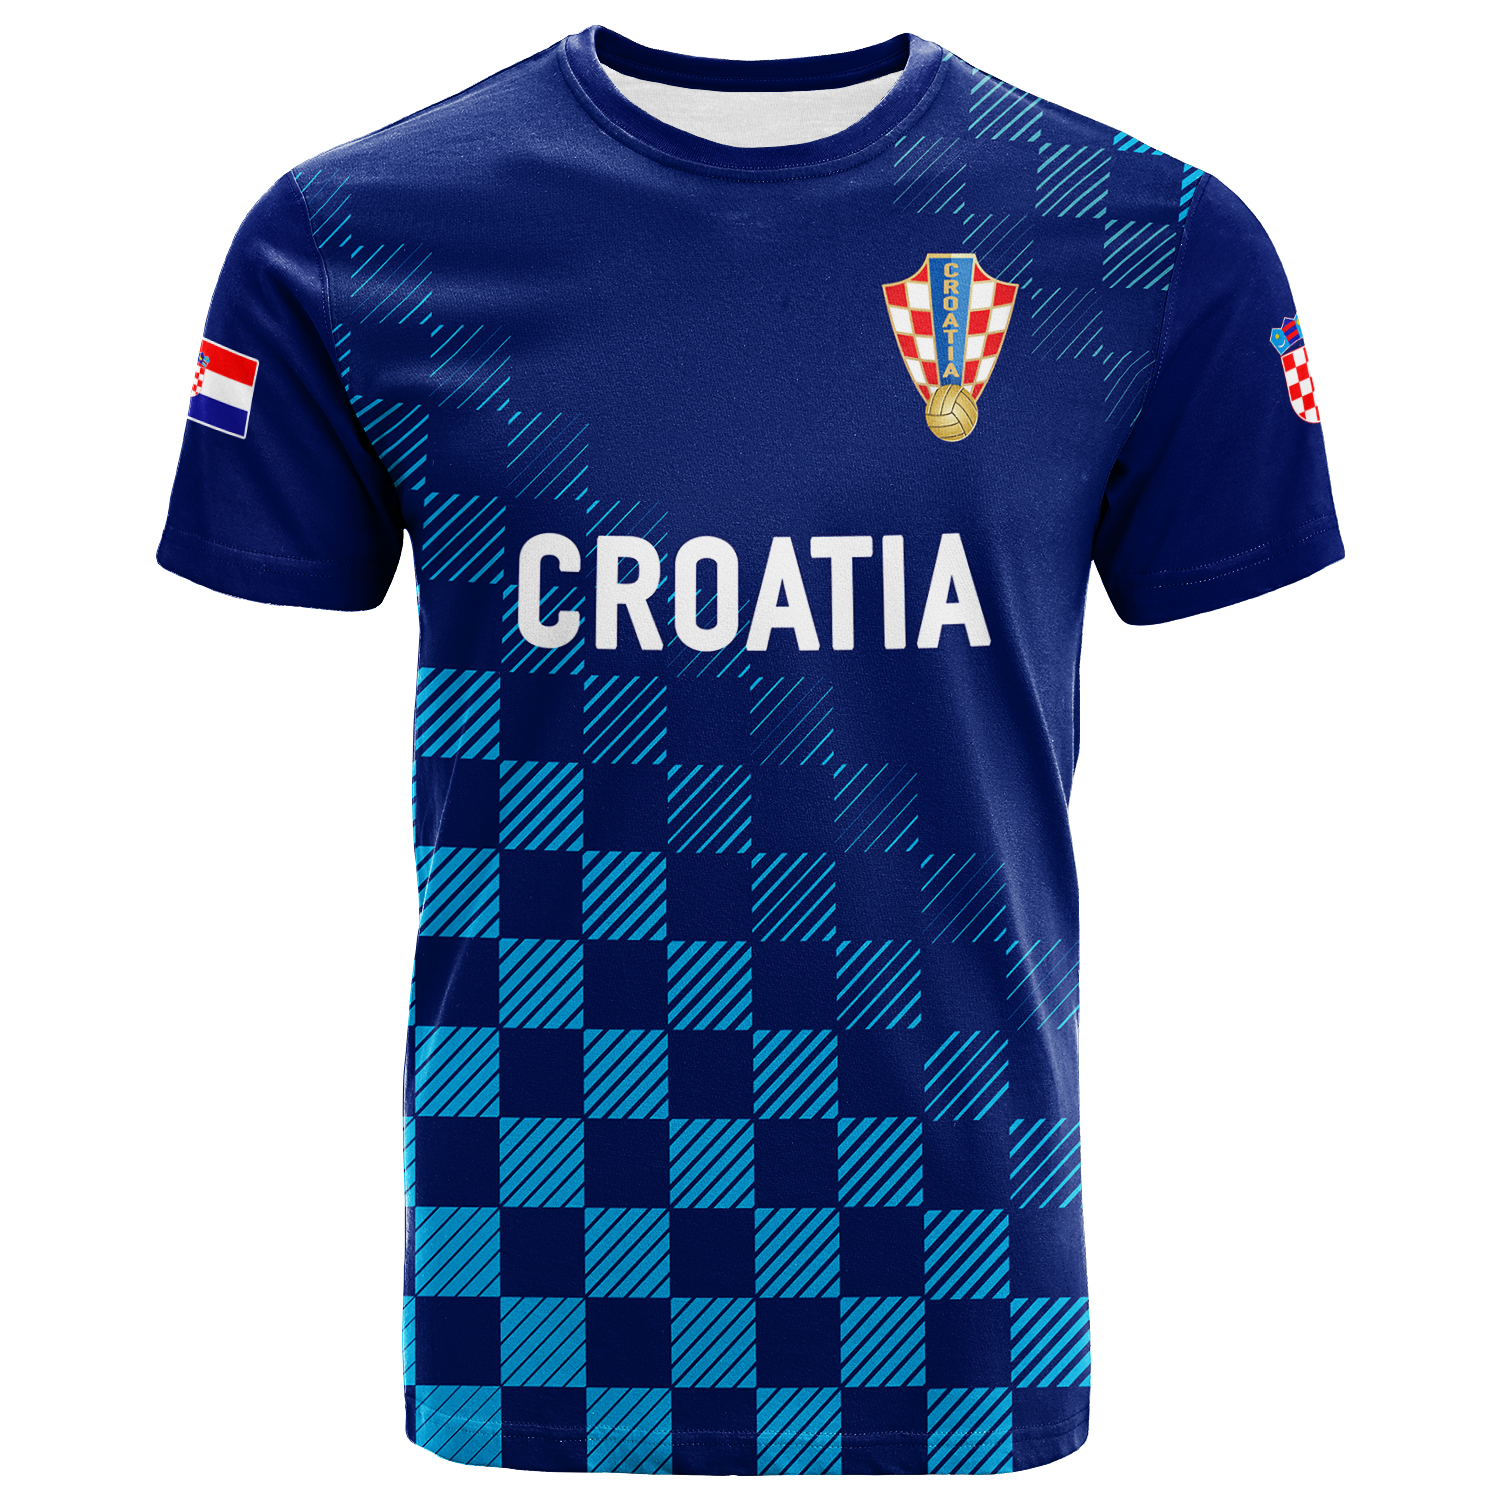 Croatia Football World Cup 2022 Champions Pride T-Shirt Blue